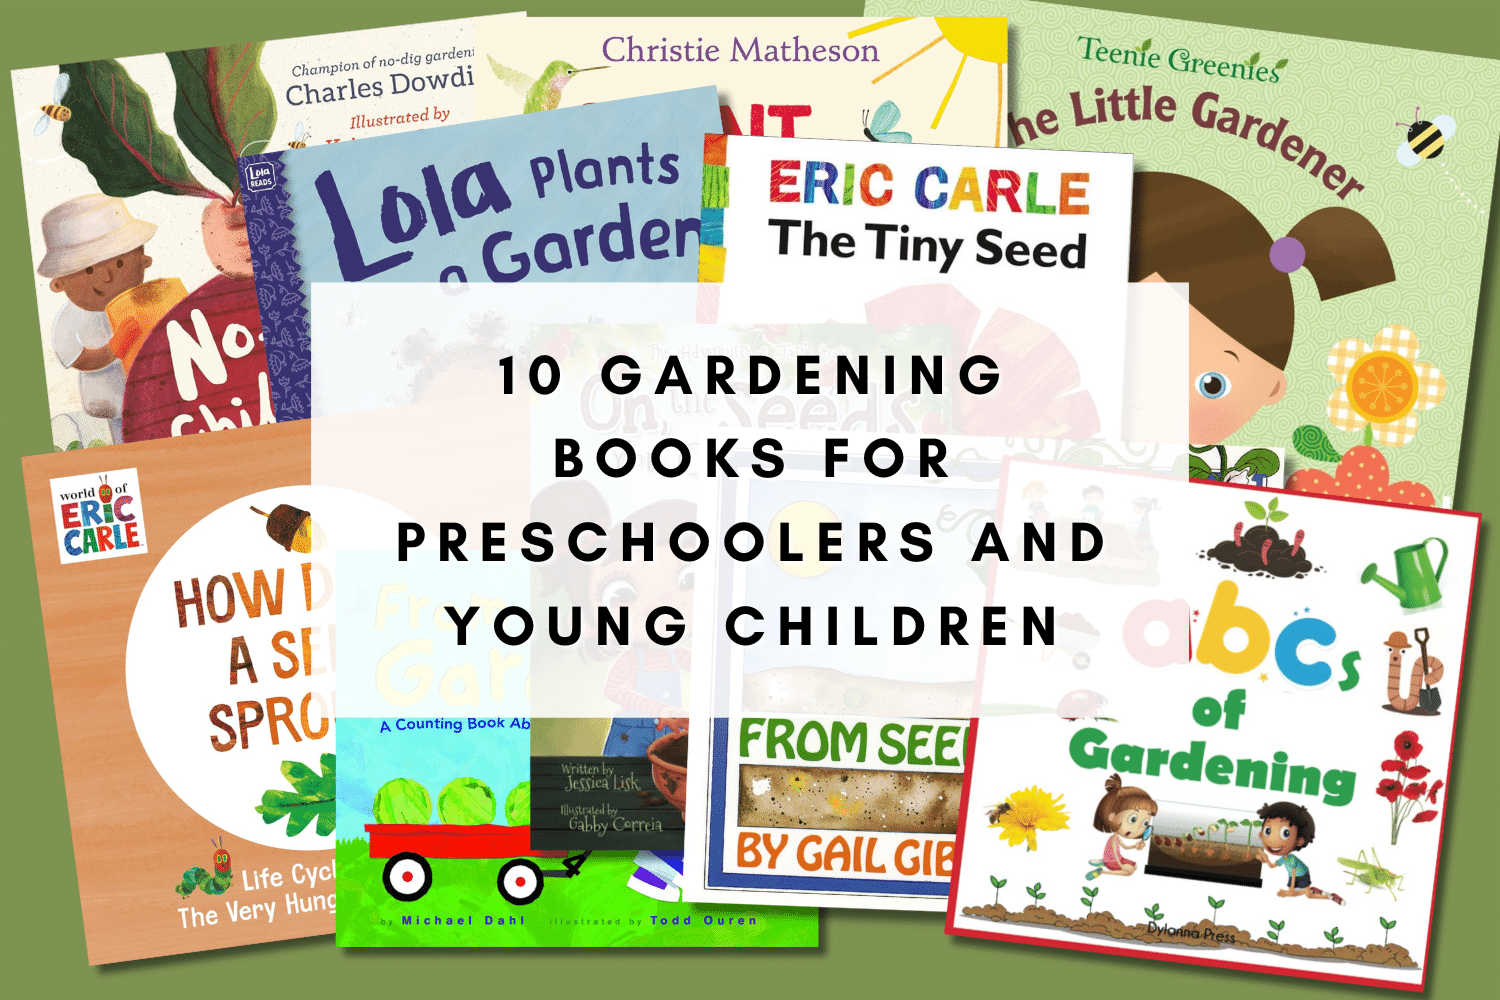 Gardening book for preschoolers and young children